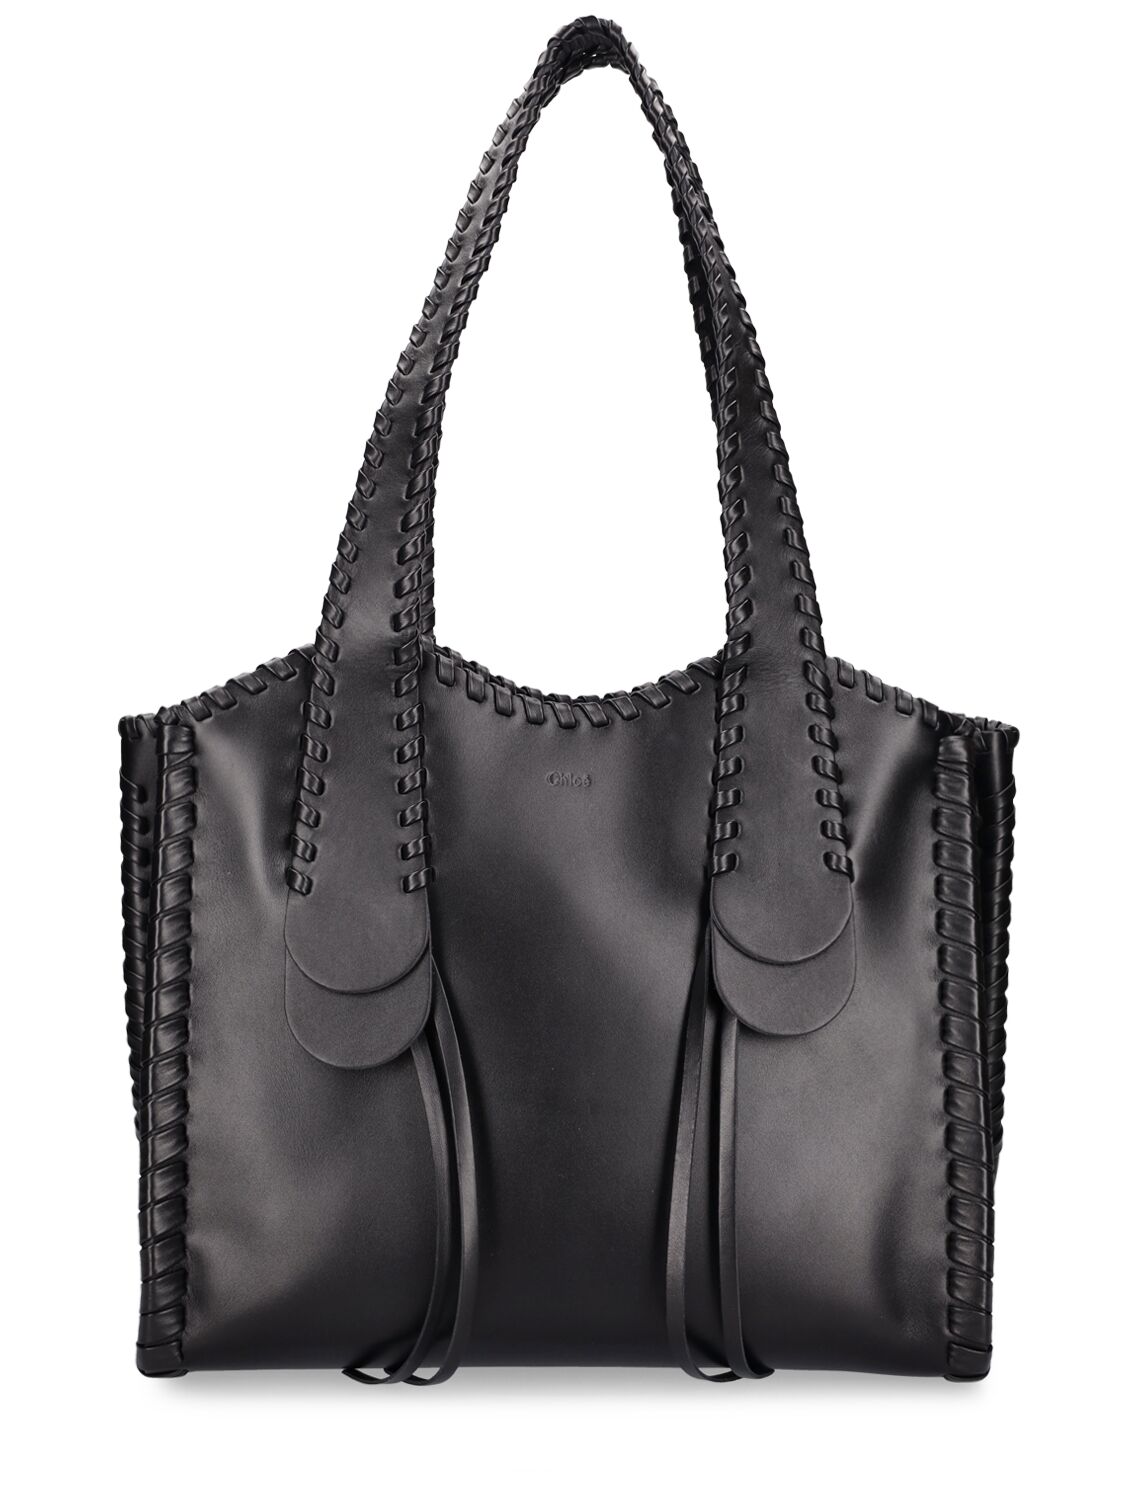 Image of Medium Mony Leather Tote Bag